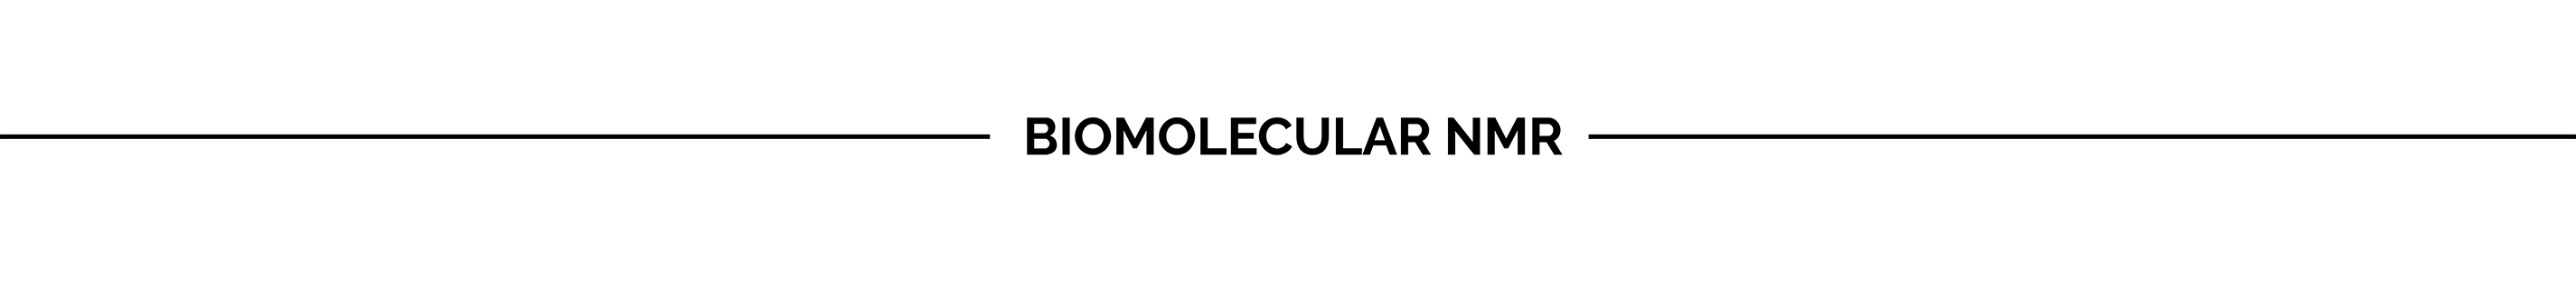 Biomolecular NMR